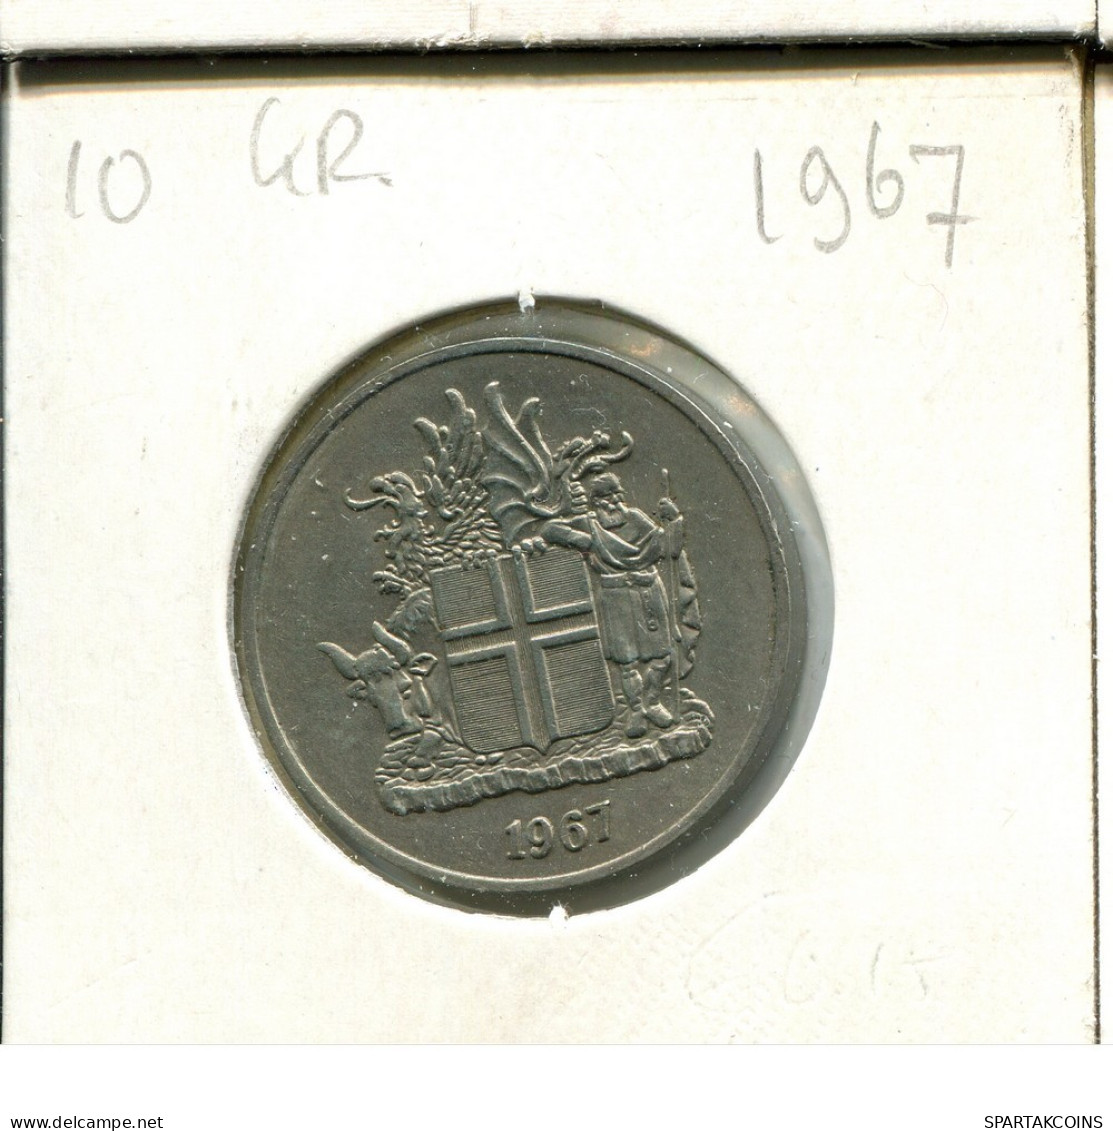 10 KRONUR 1967 ICELAND Coin #AT070.U.A - IJsland